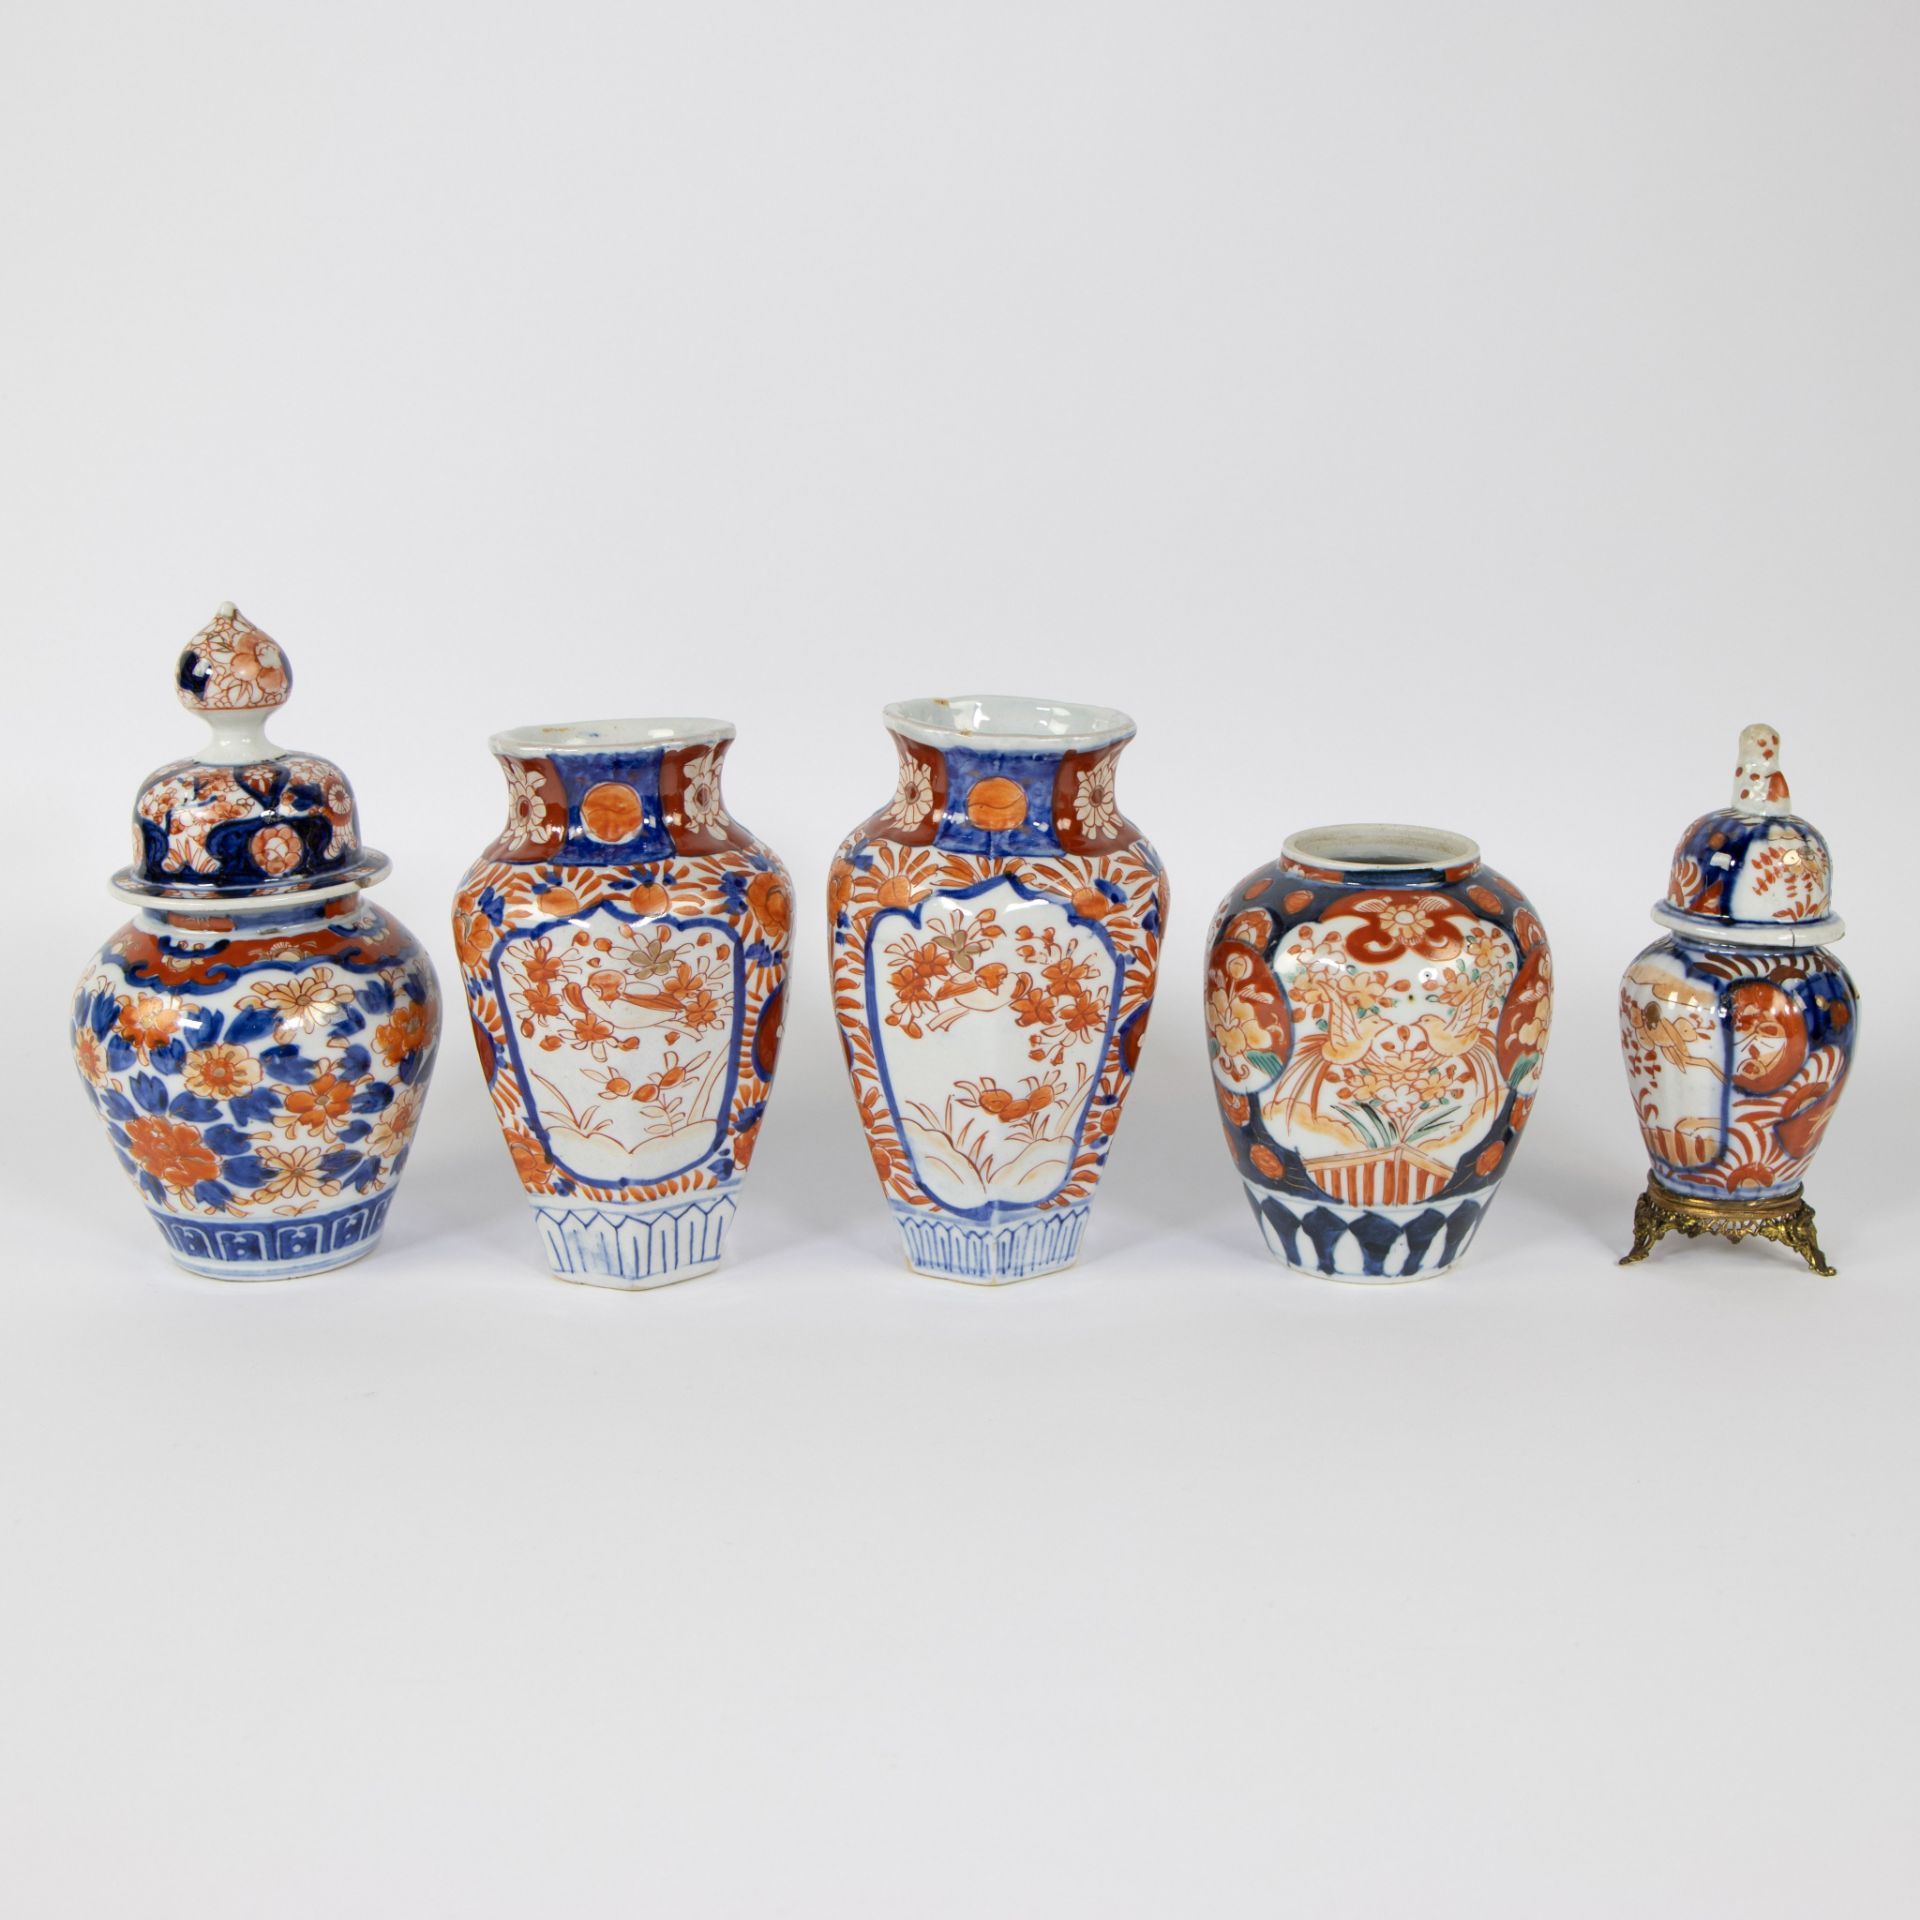 Large lot of Japanese porcelain Imari vases and lidded vases, 19th century - Image 2 of 11